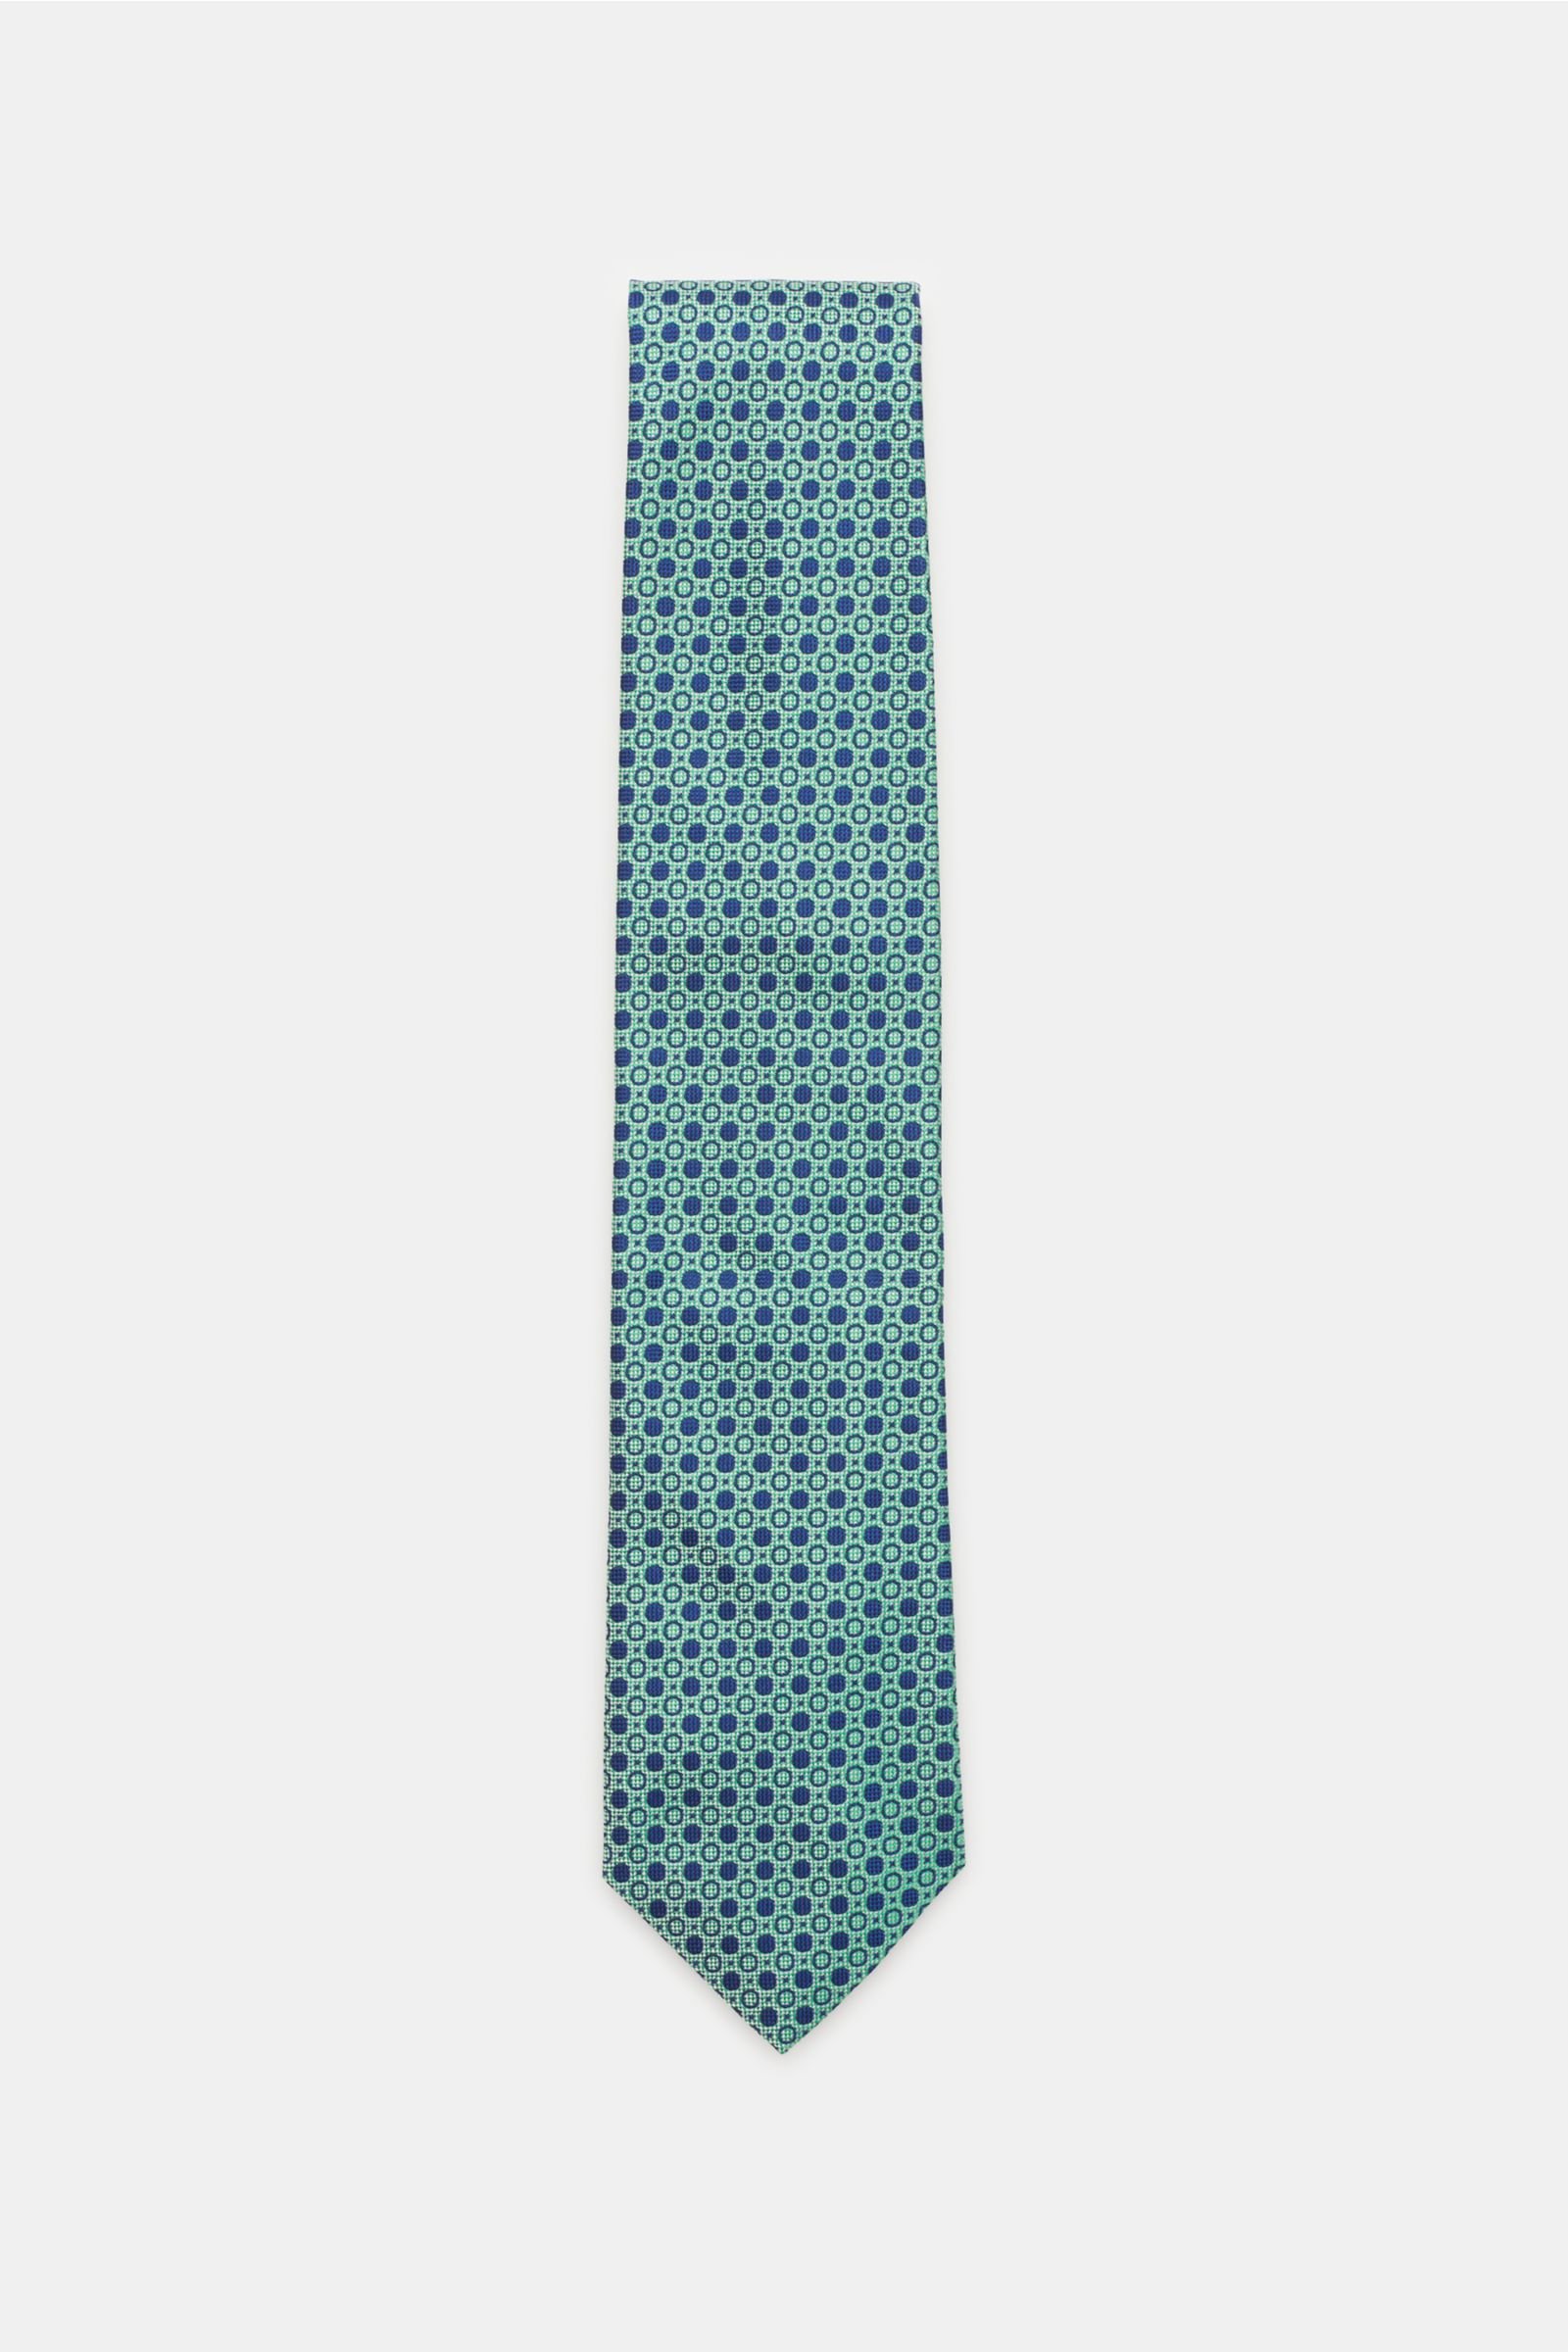 Silk tie green/navy with polka dots